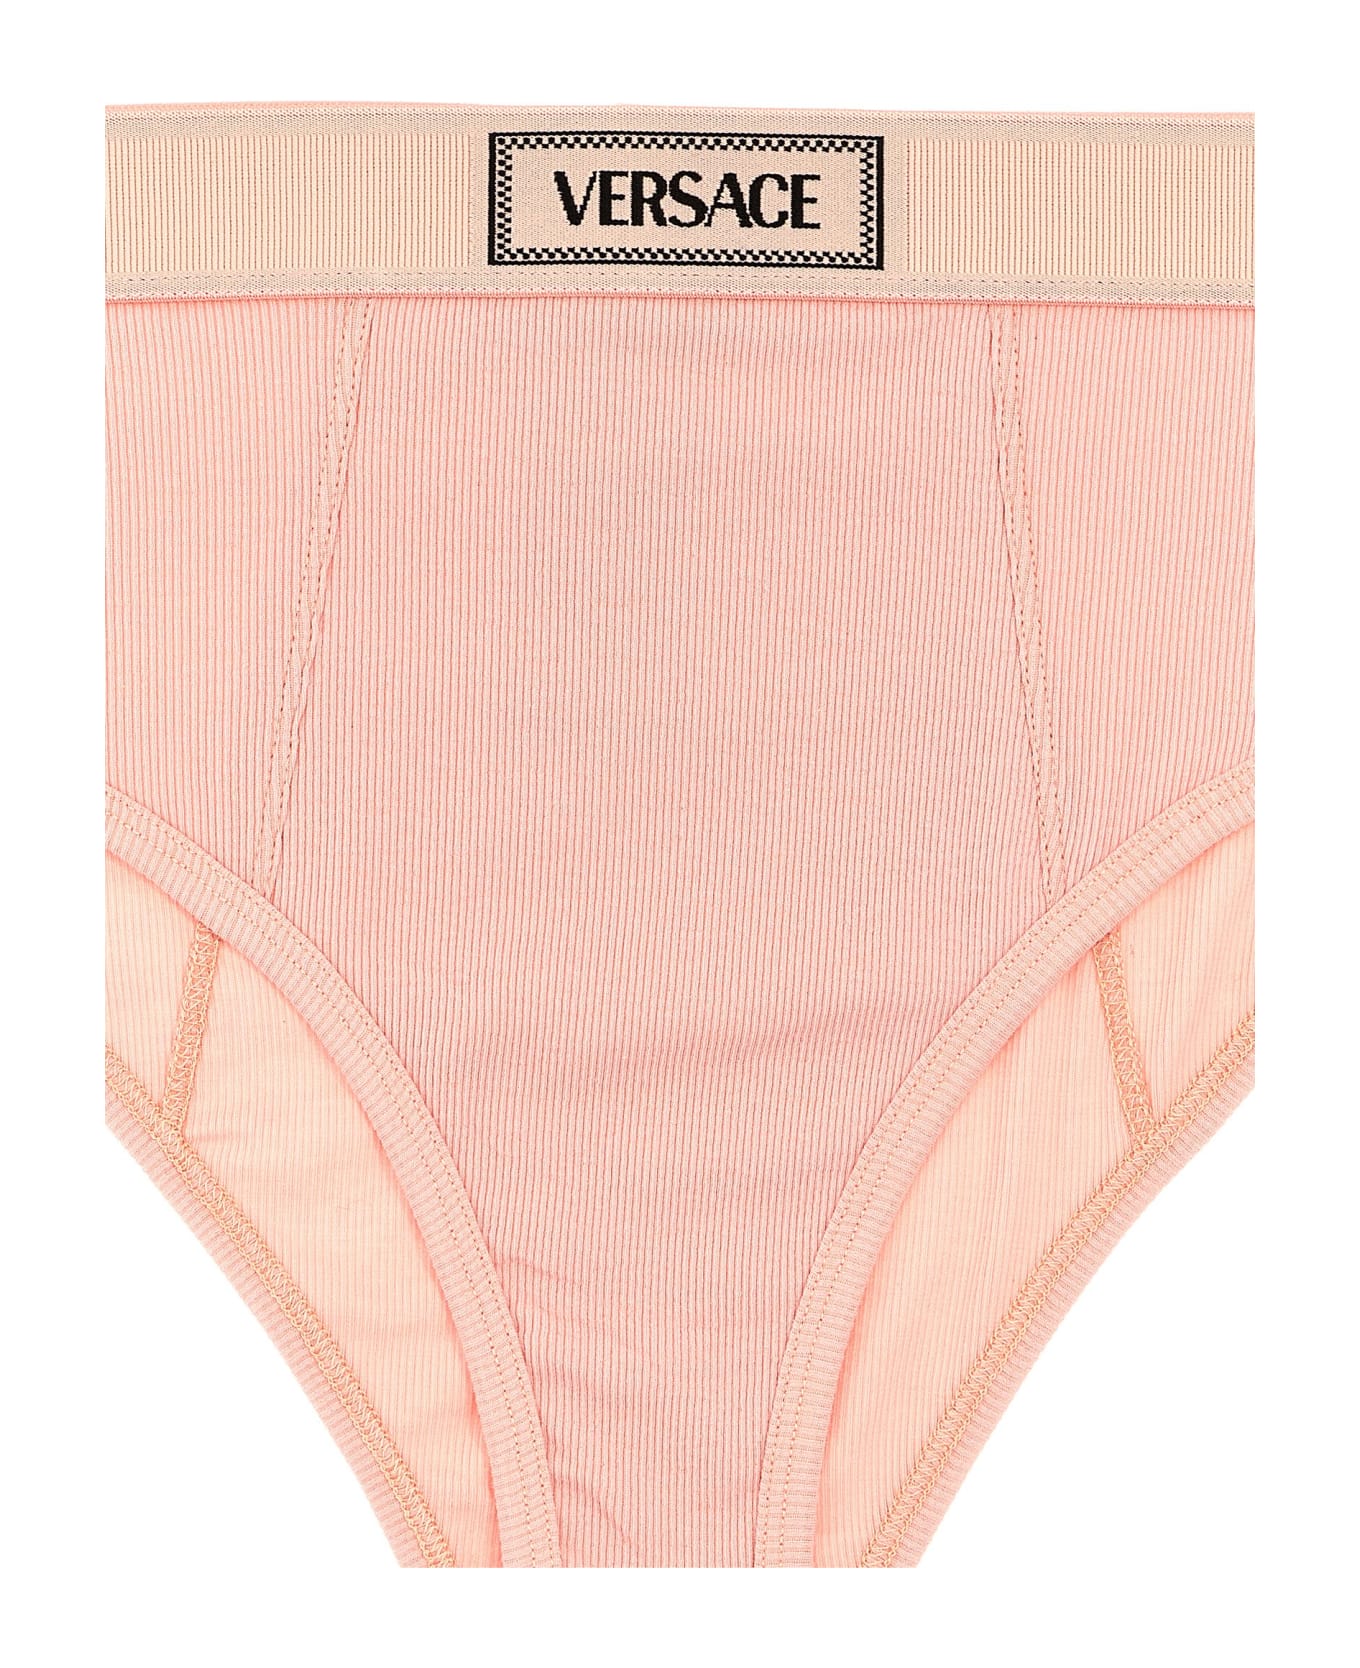 Versace '90s Vintage' Briefs - Pink